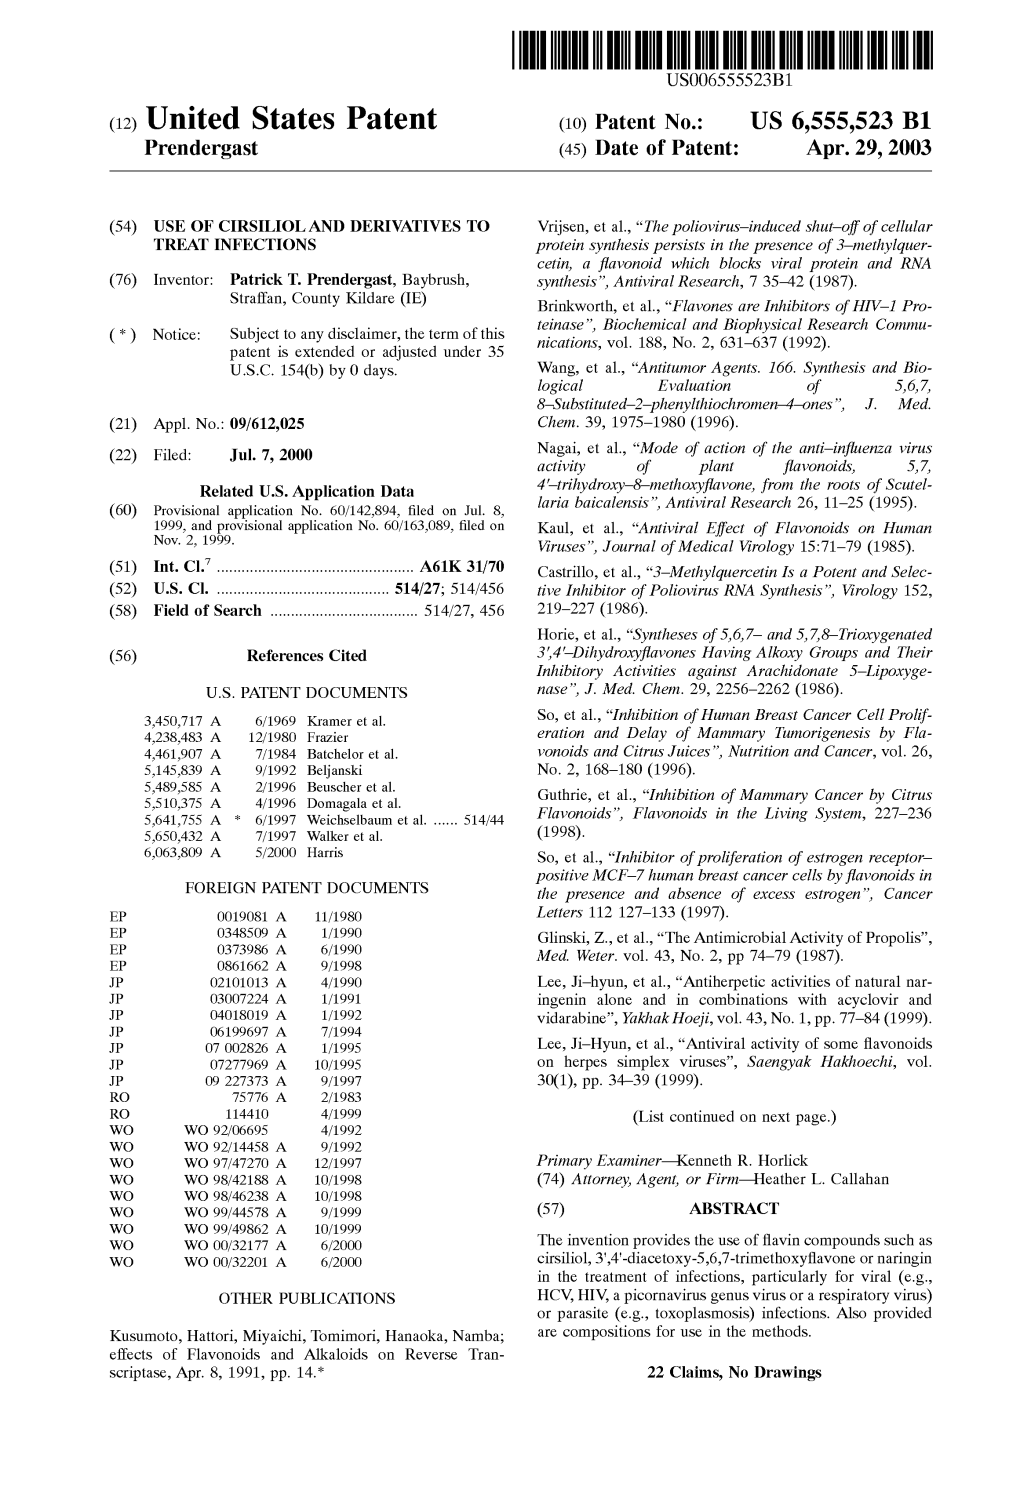 (12) United States Patent (10) Patent No.: US 6,555,523 B1 Prendergast (45) Date of Patent: Apr